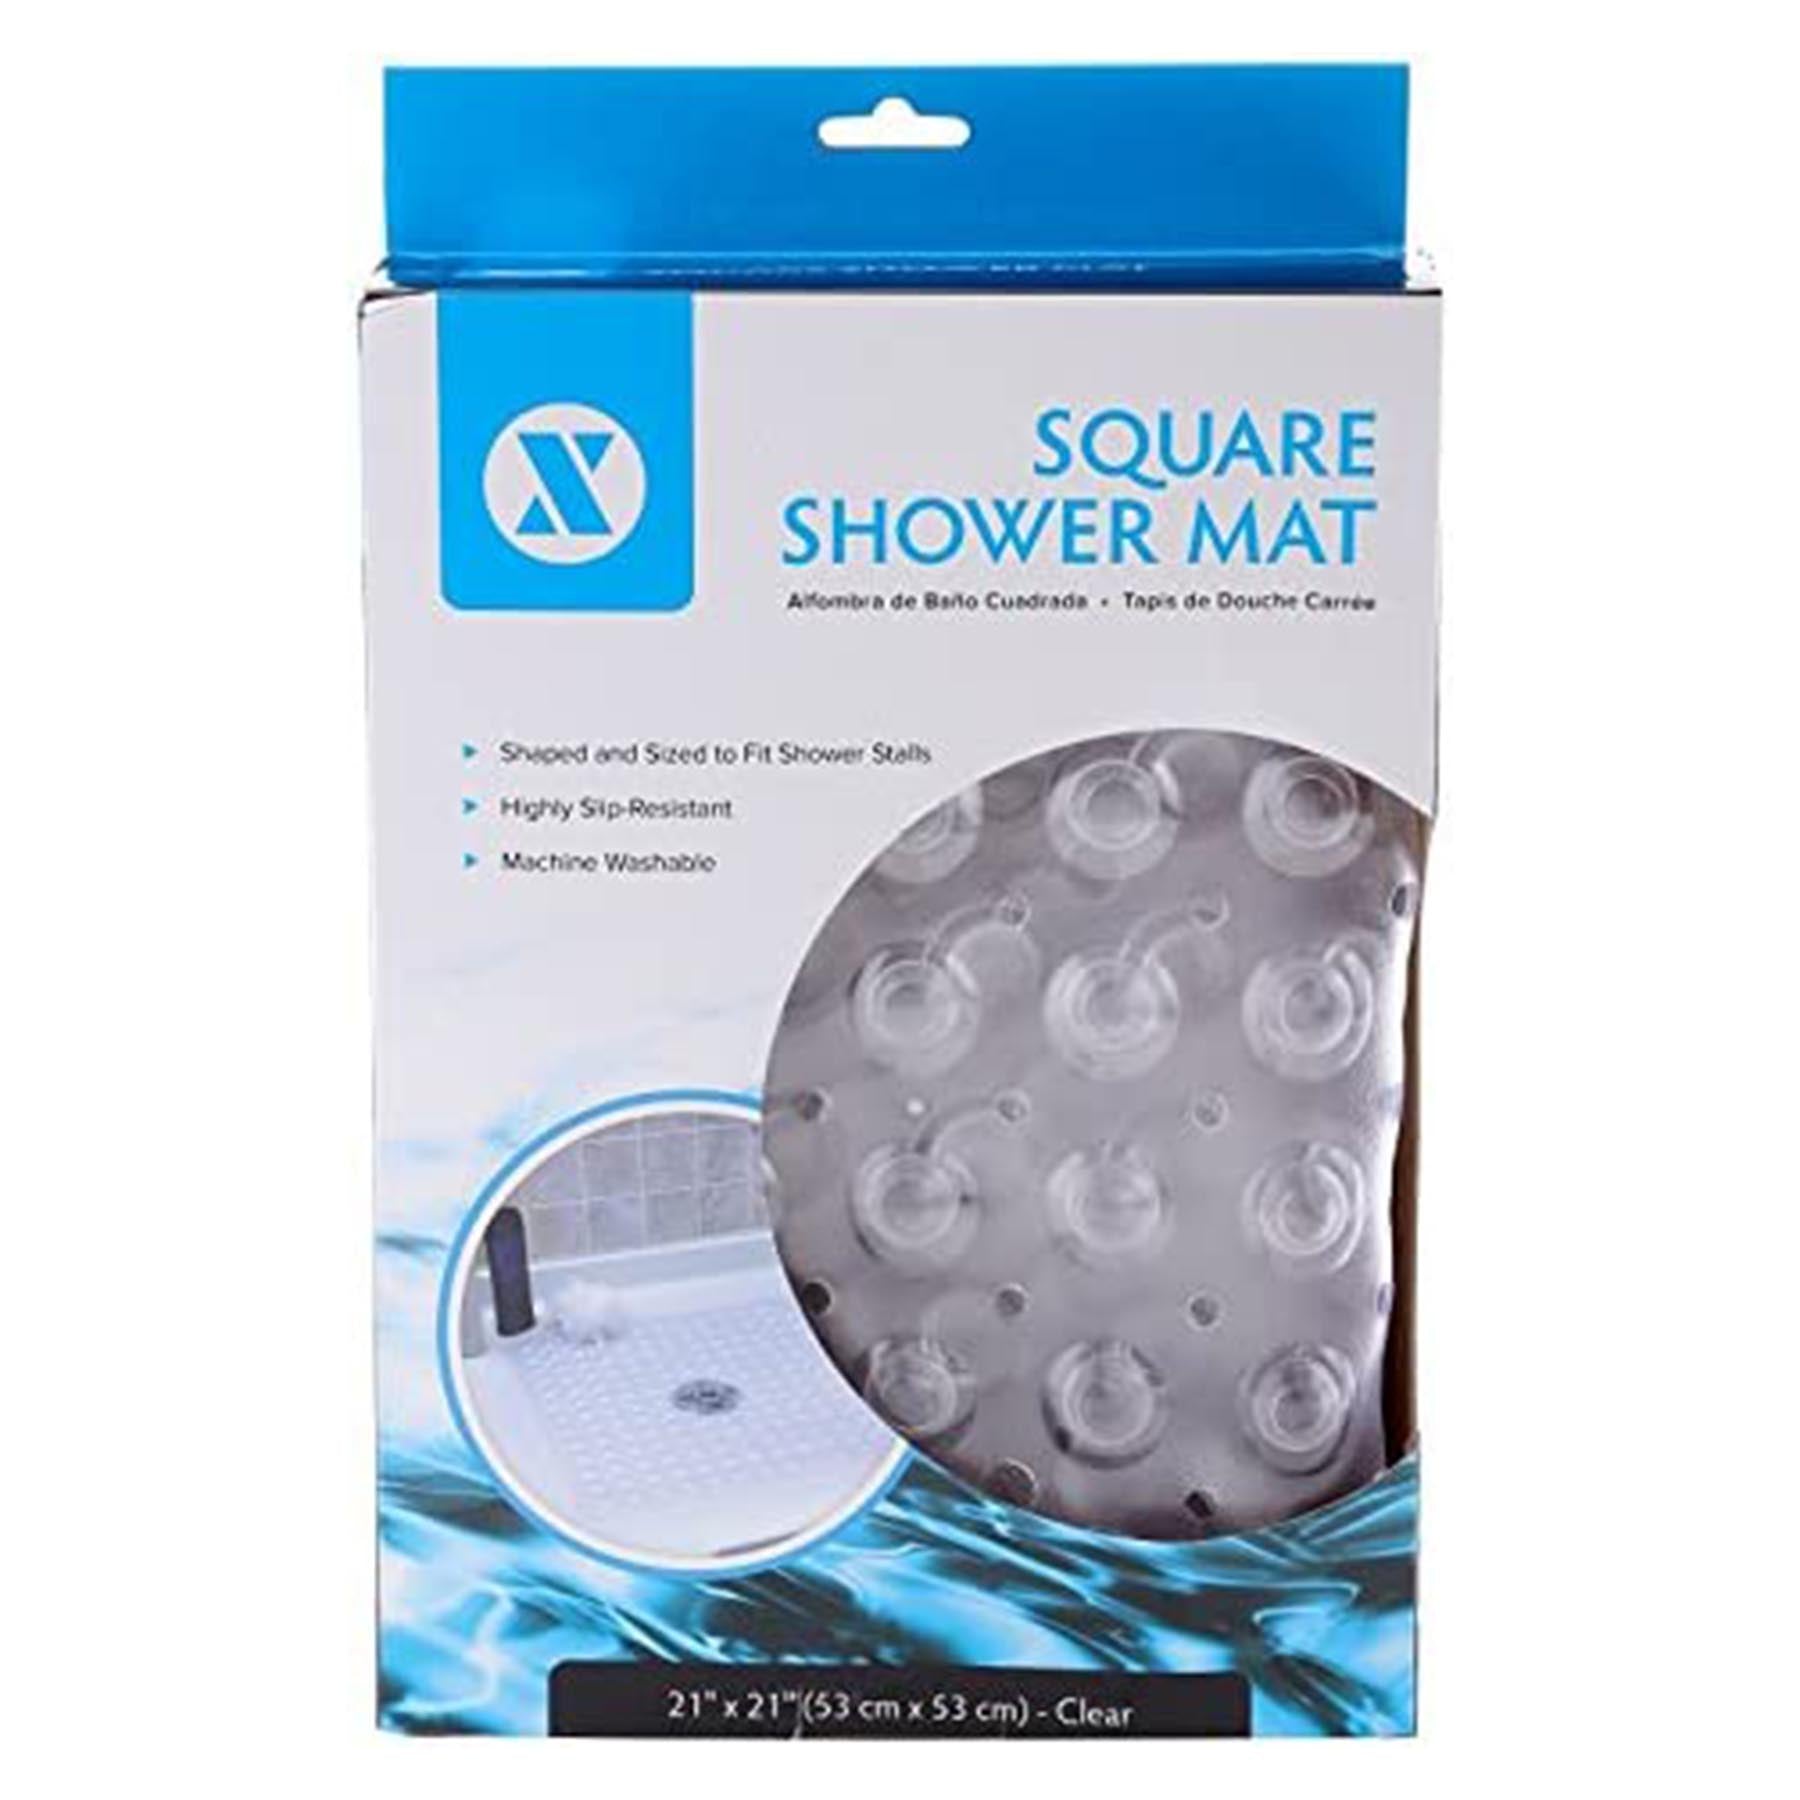 Square Shower Mat, Clear Color